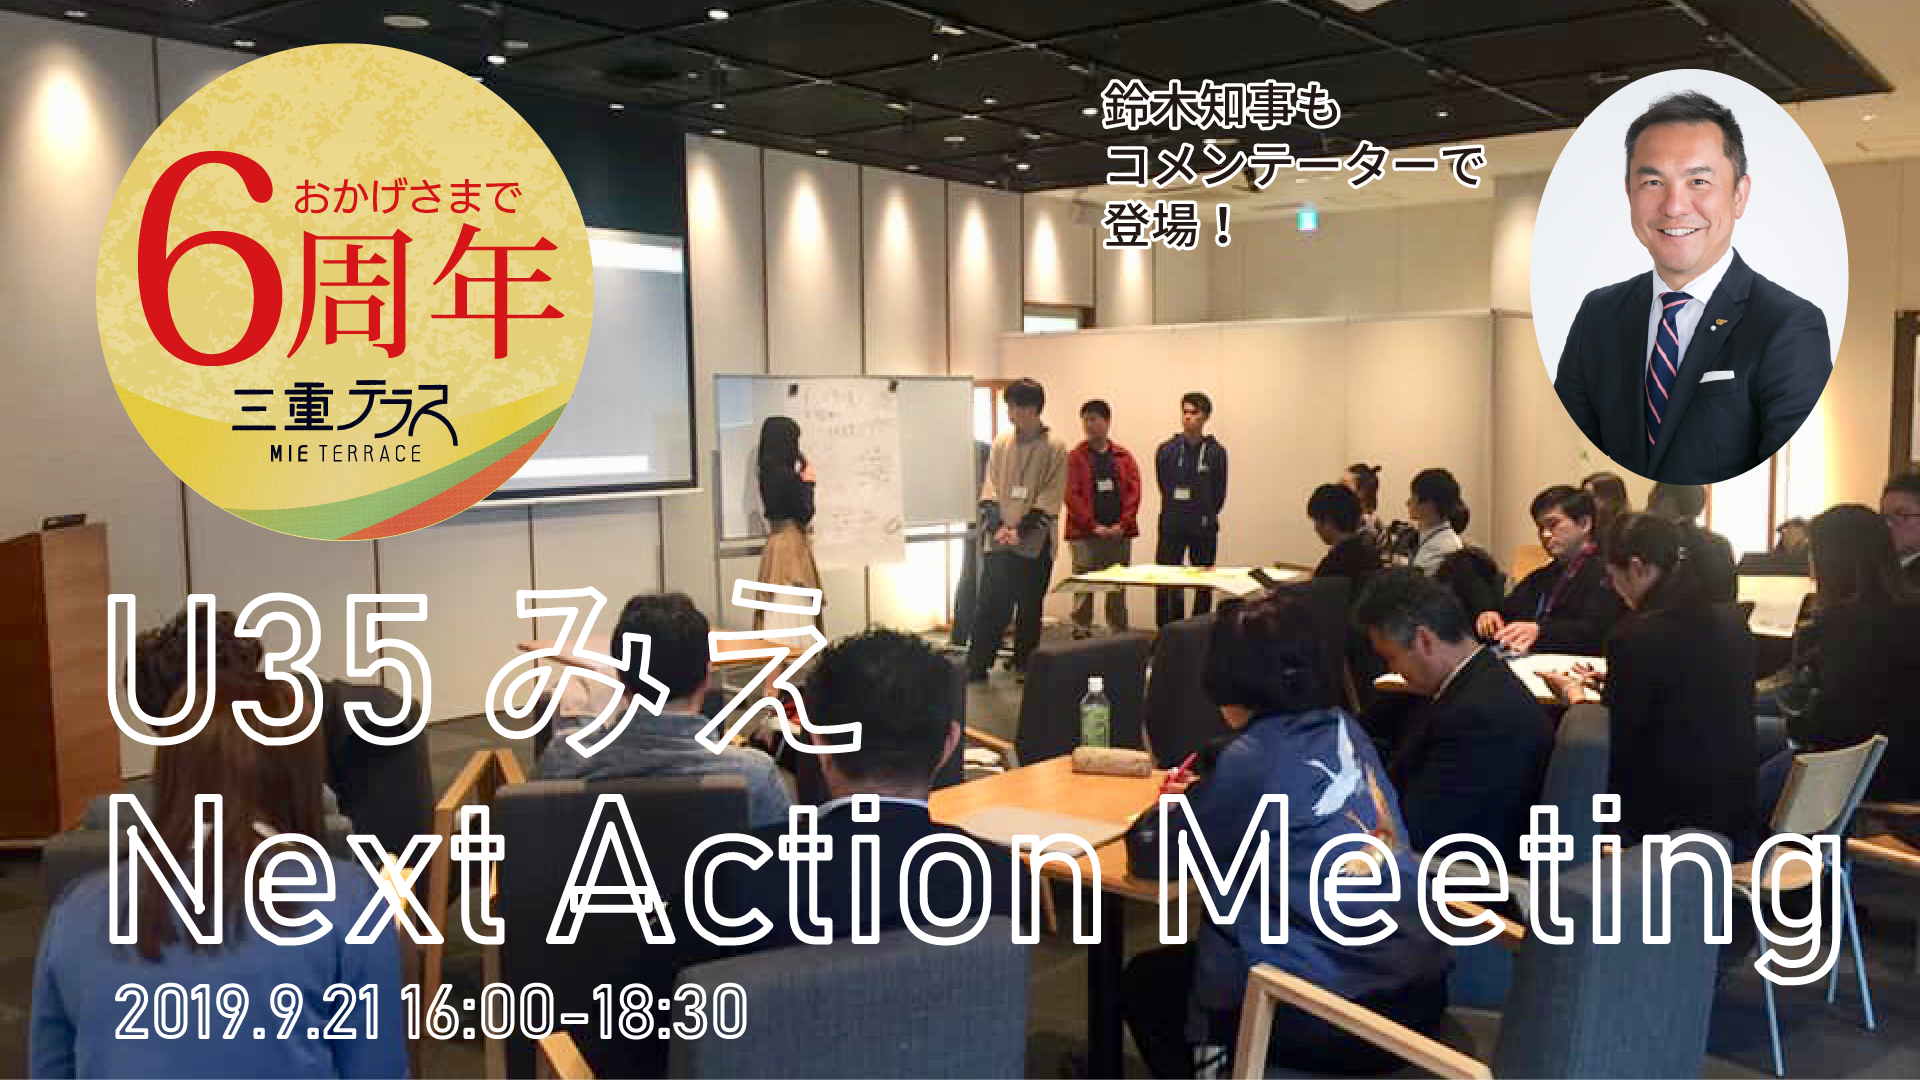 U35 みえ Next Action Meeting